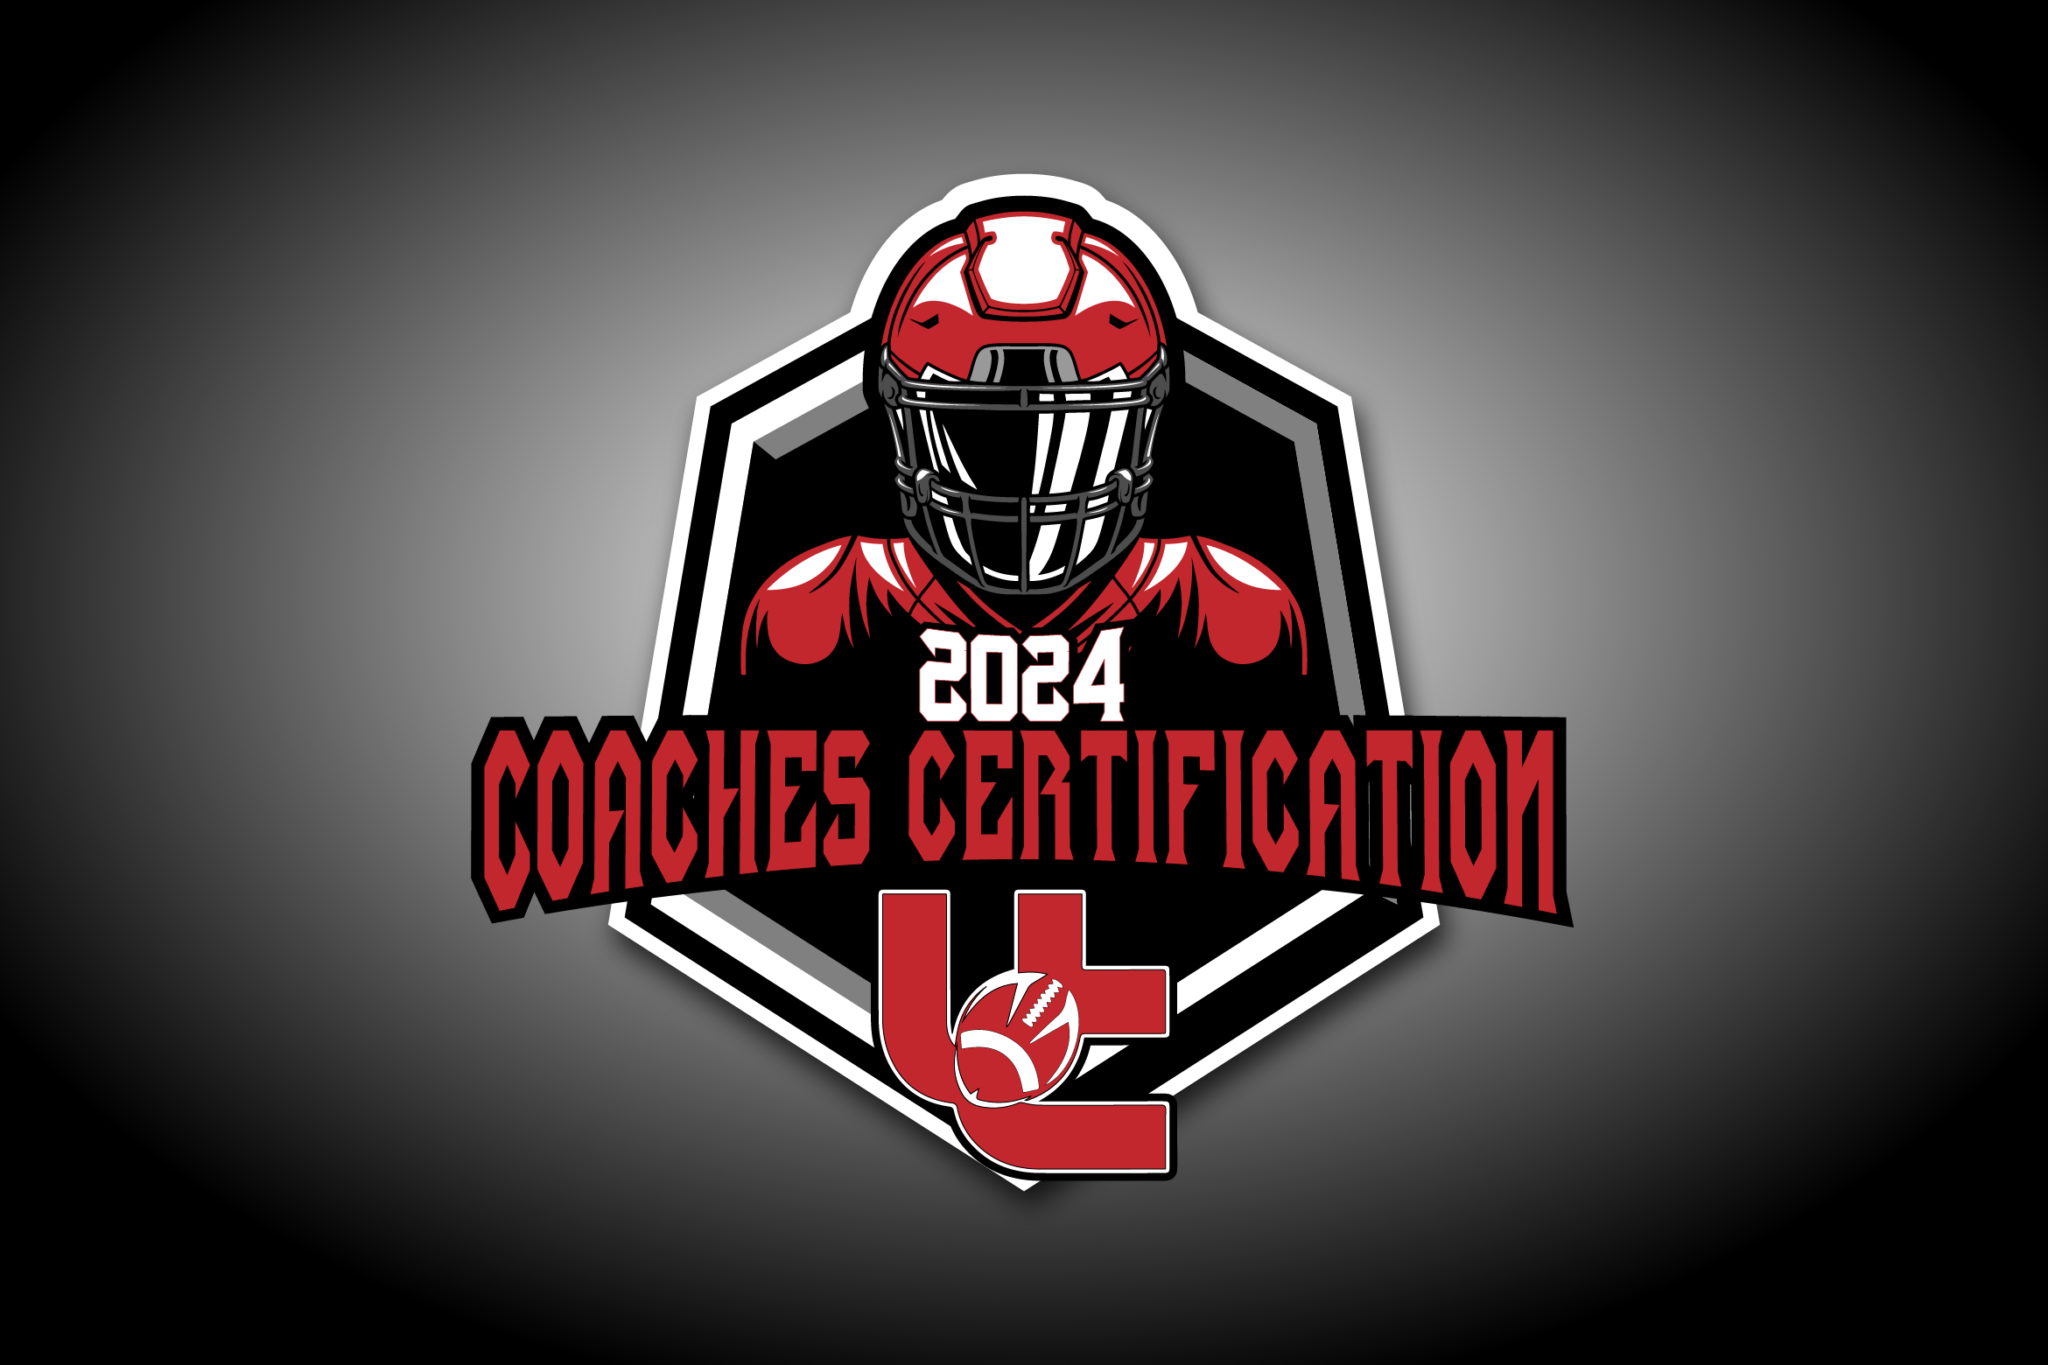 2024 Coaches Certification Logo 01 2048x1365 